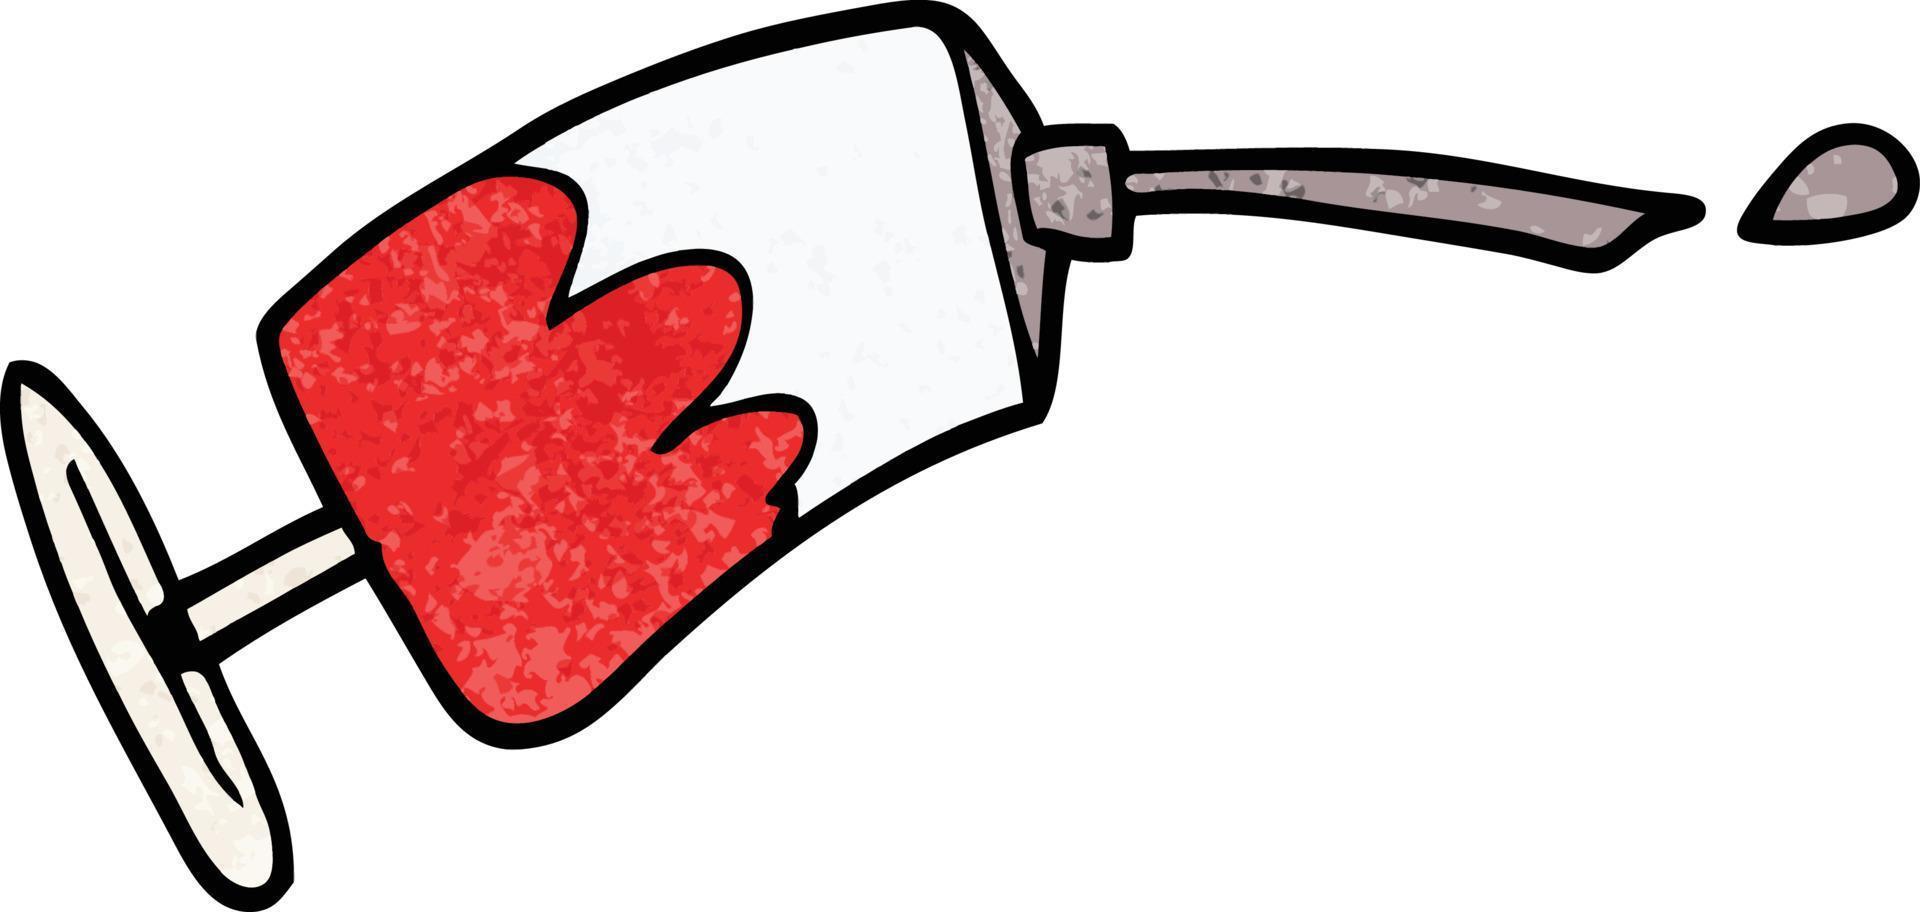 cartone animato doodle siringa di sangue vettore